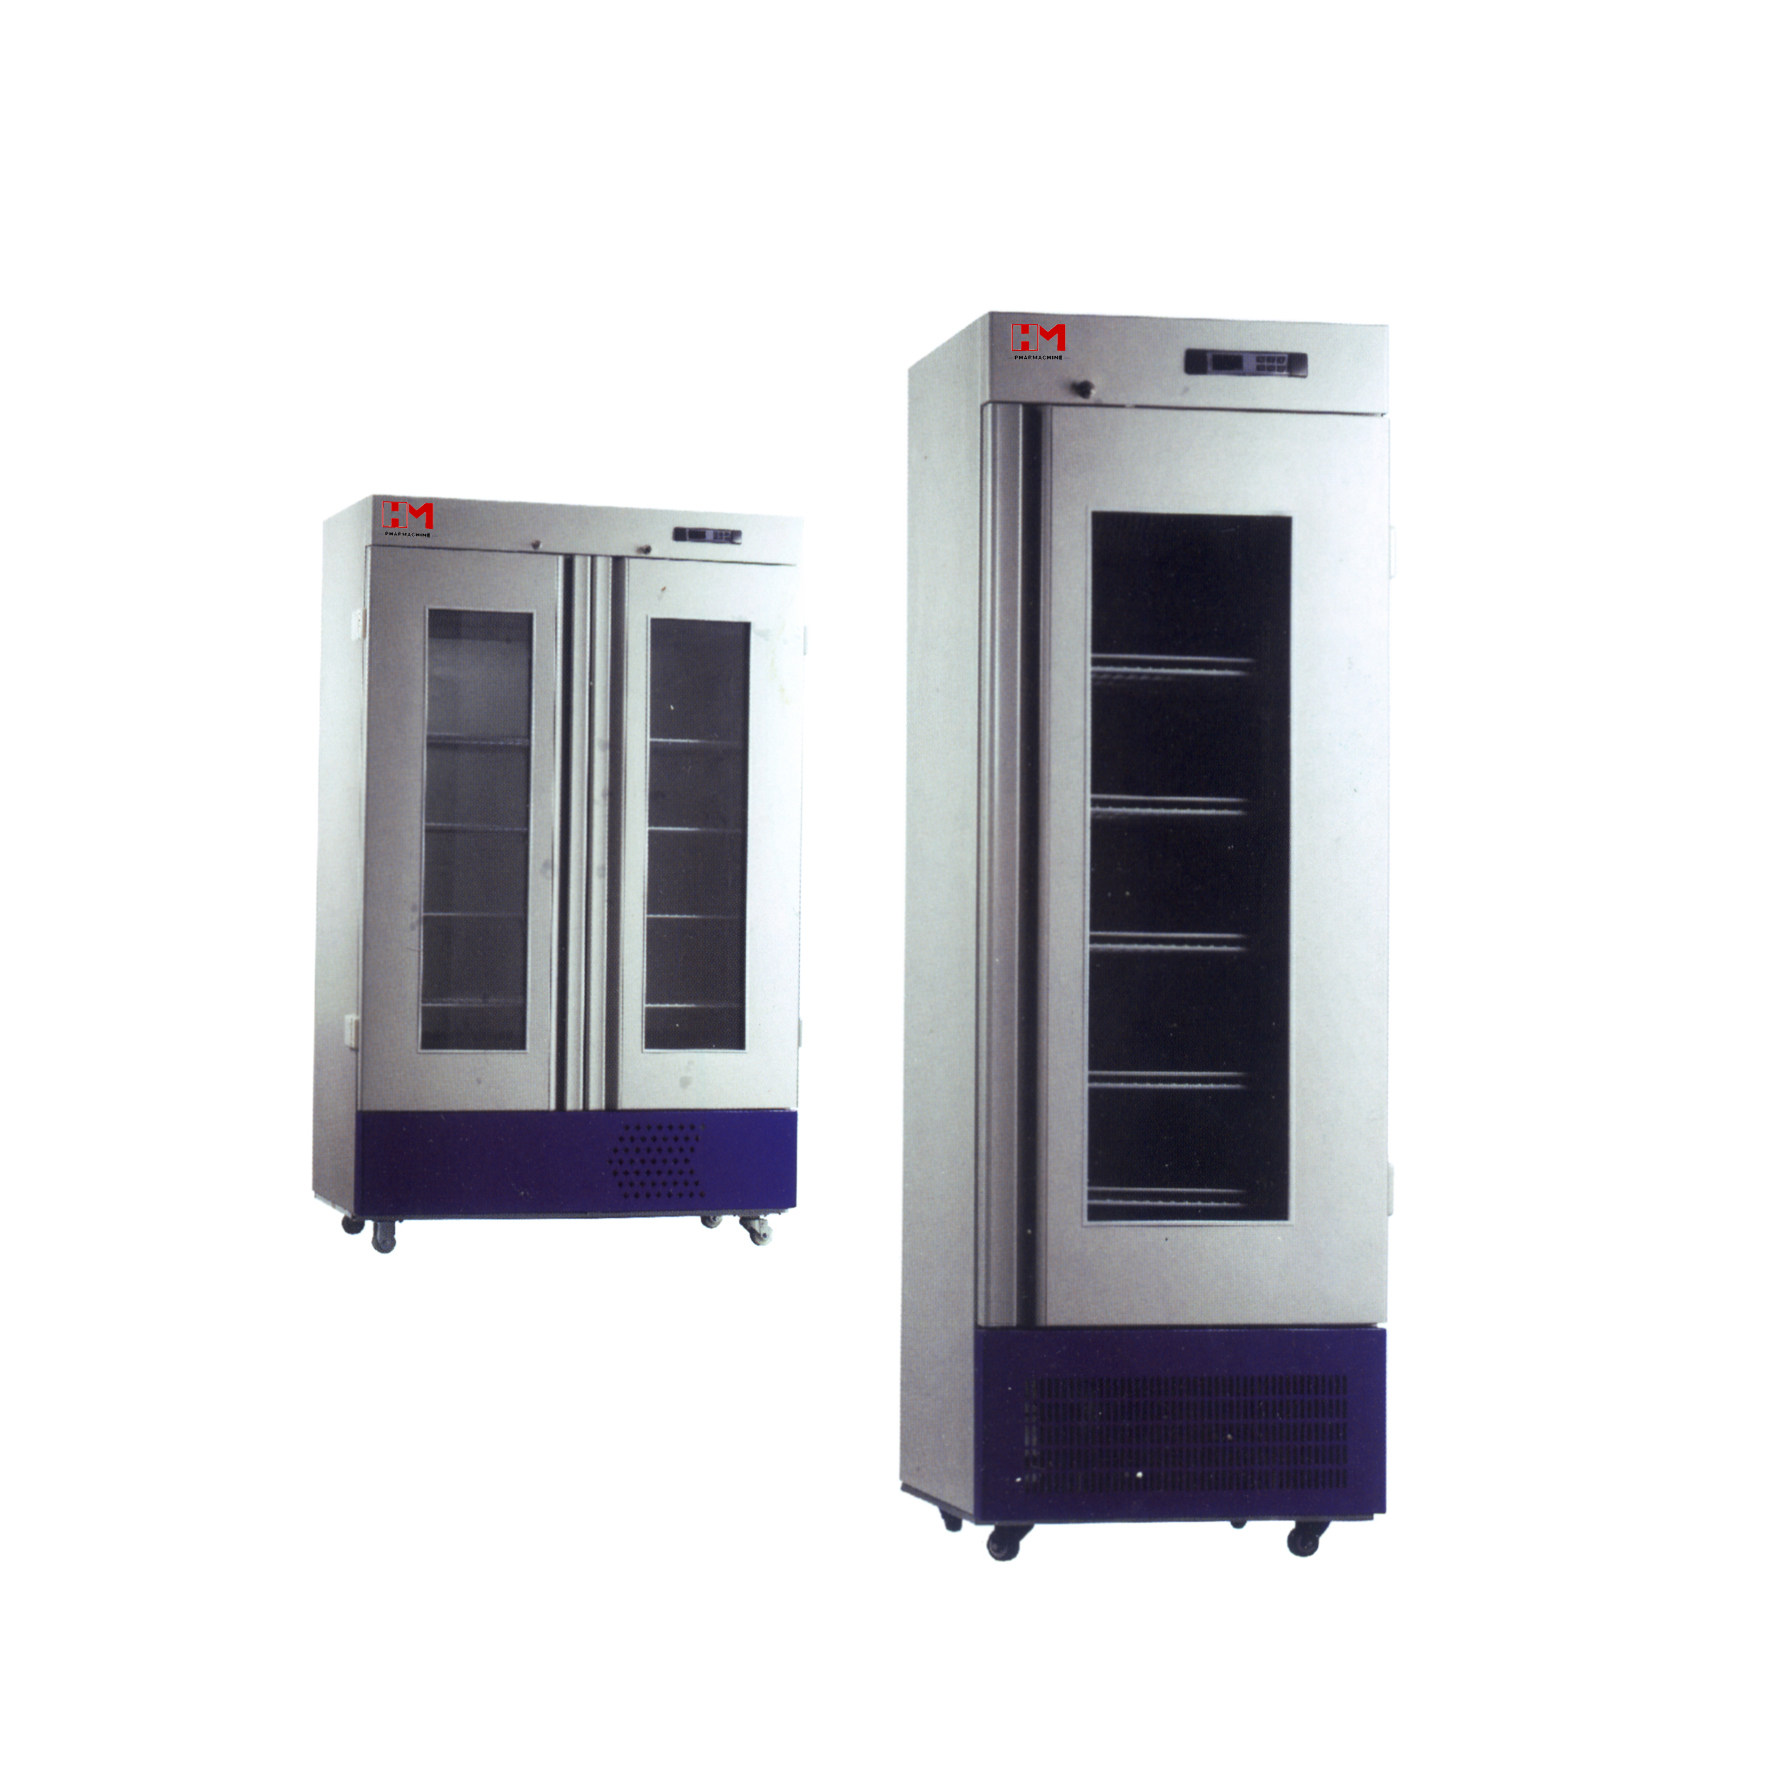 HM L SF L series Laboratory Storage Freezer